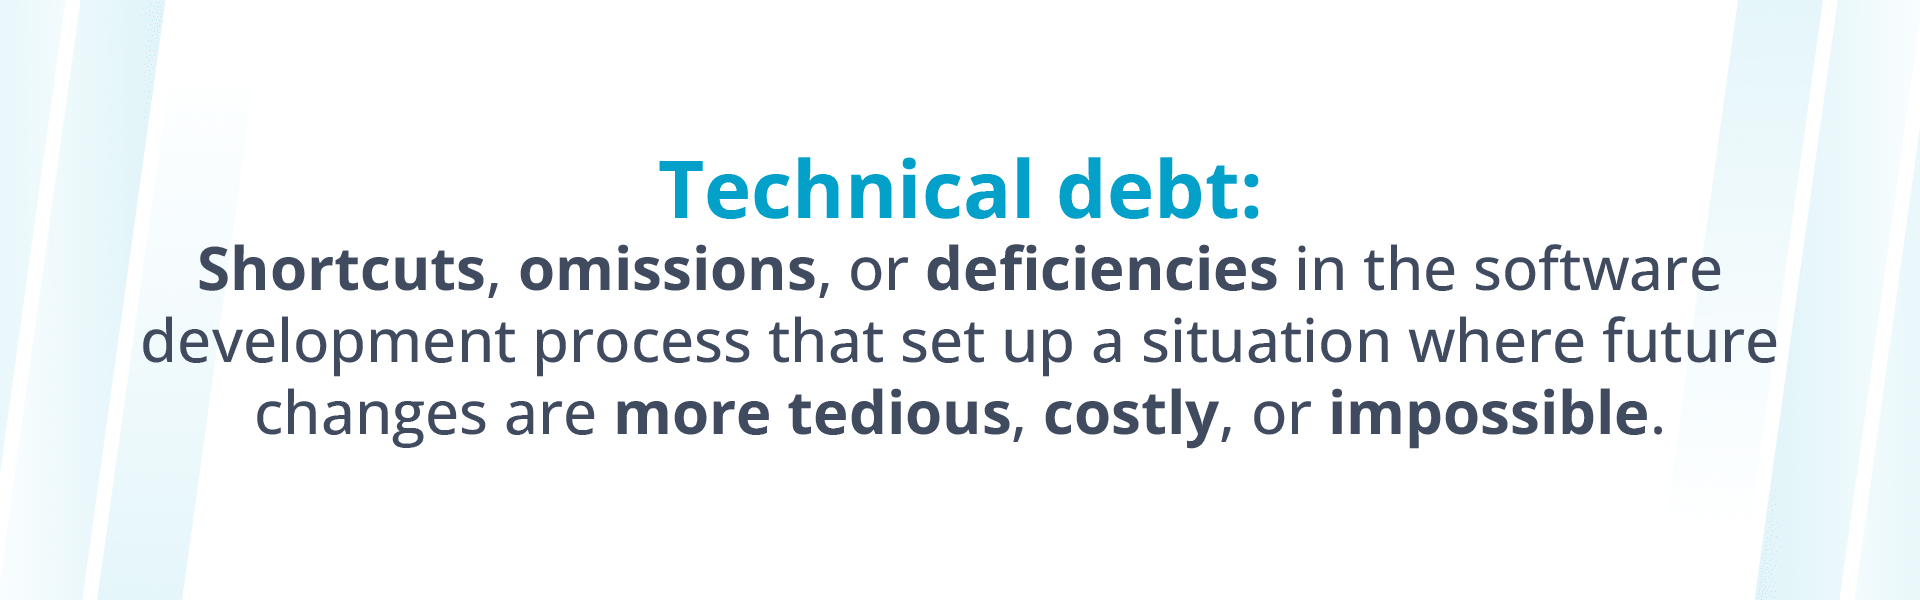 Technical debt definition.